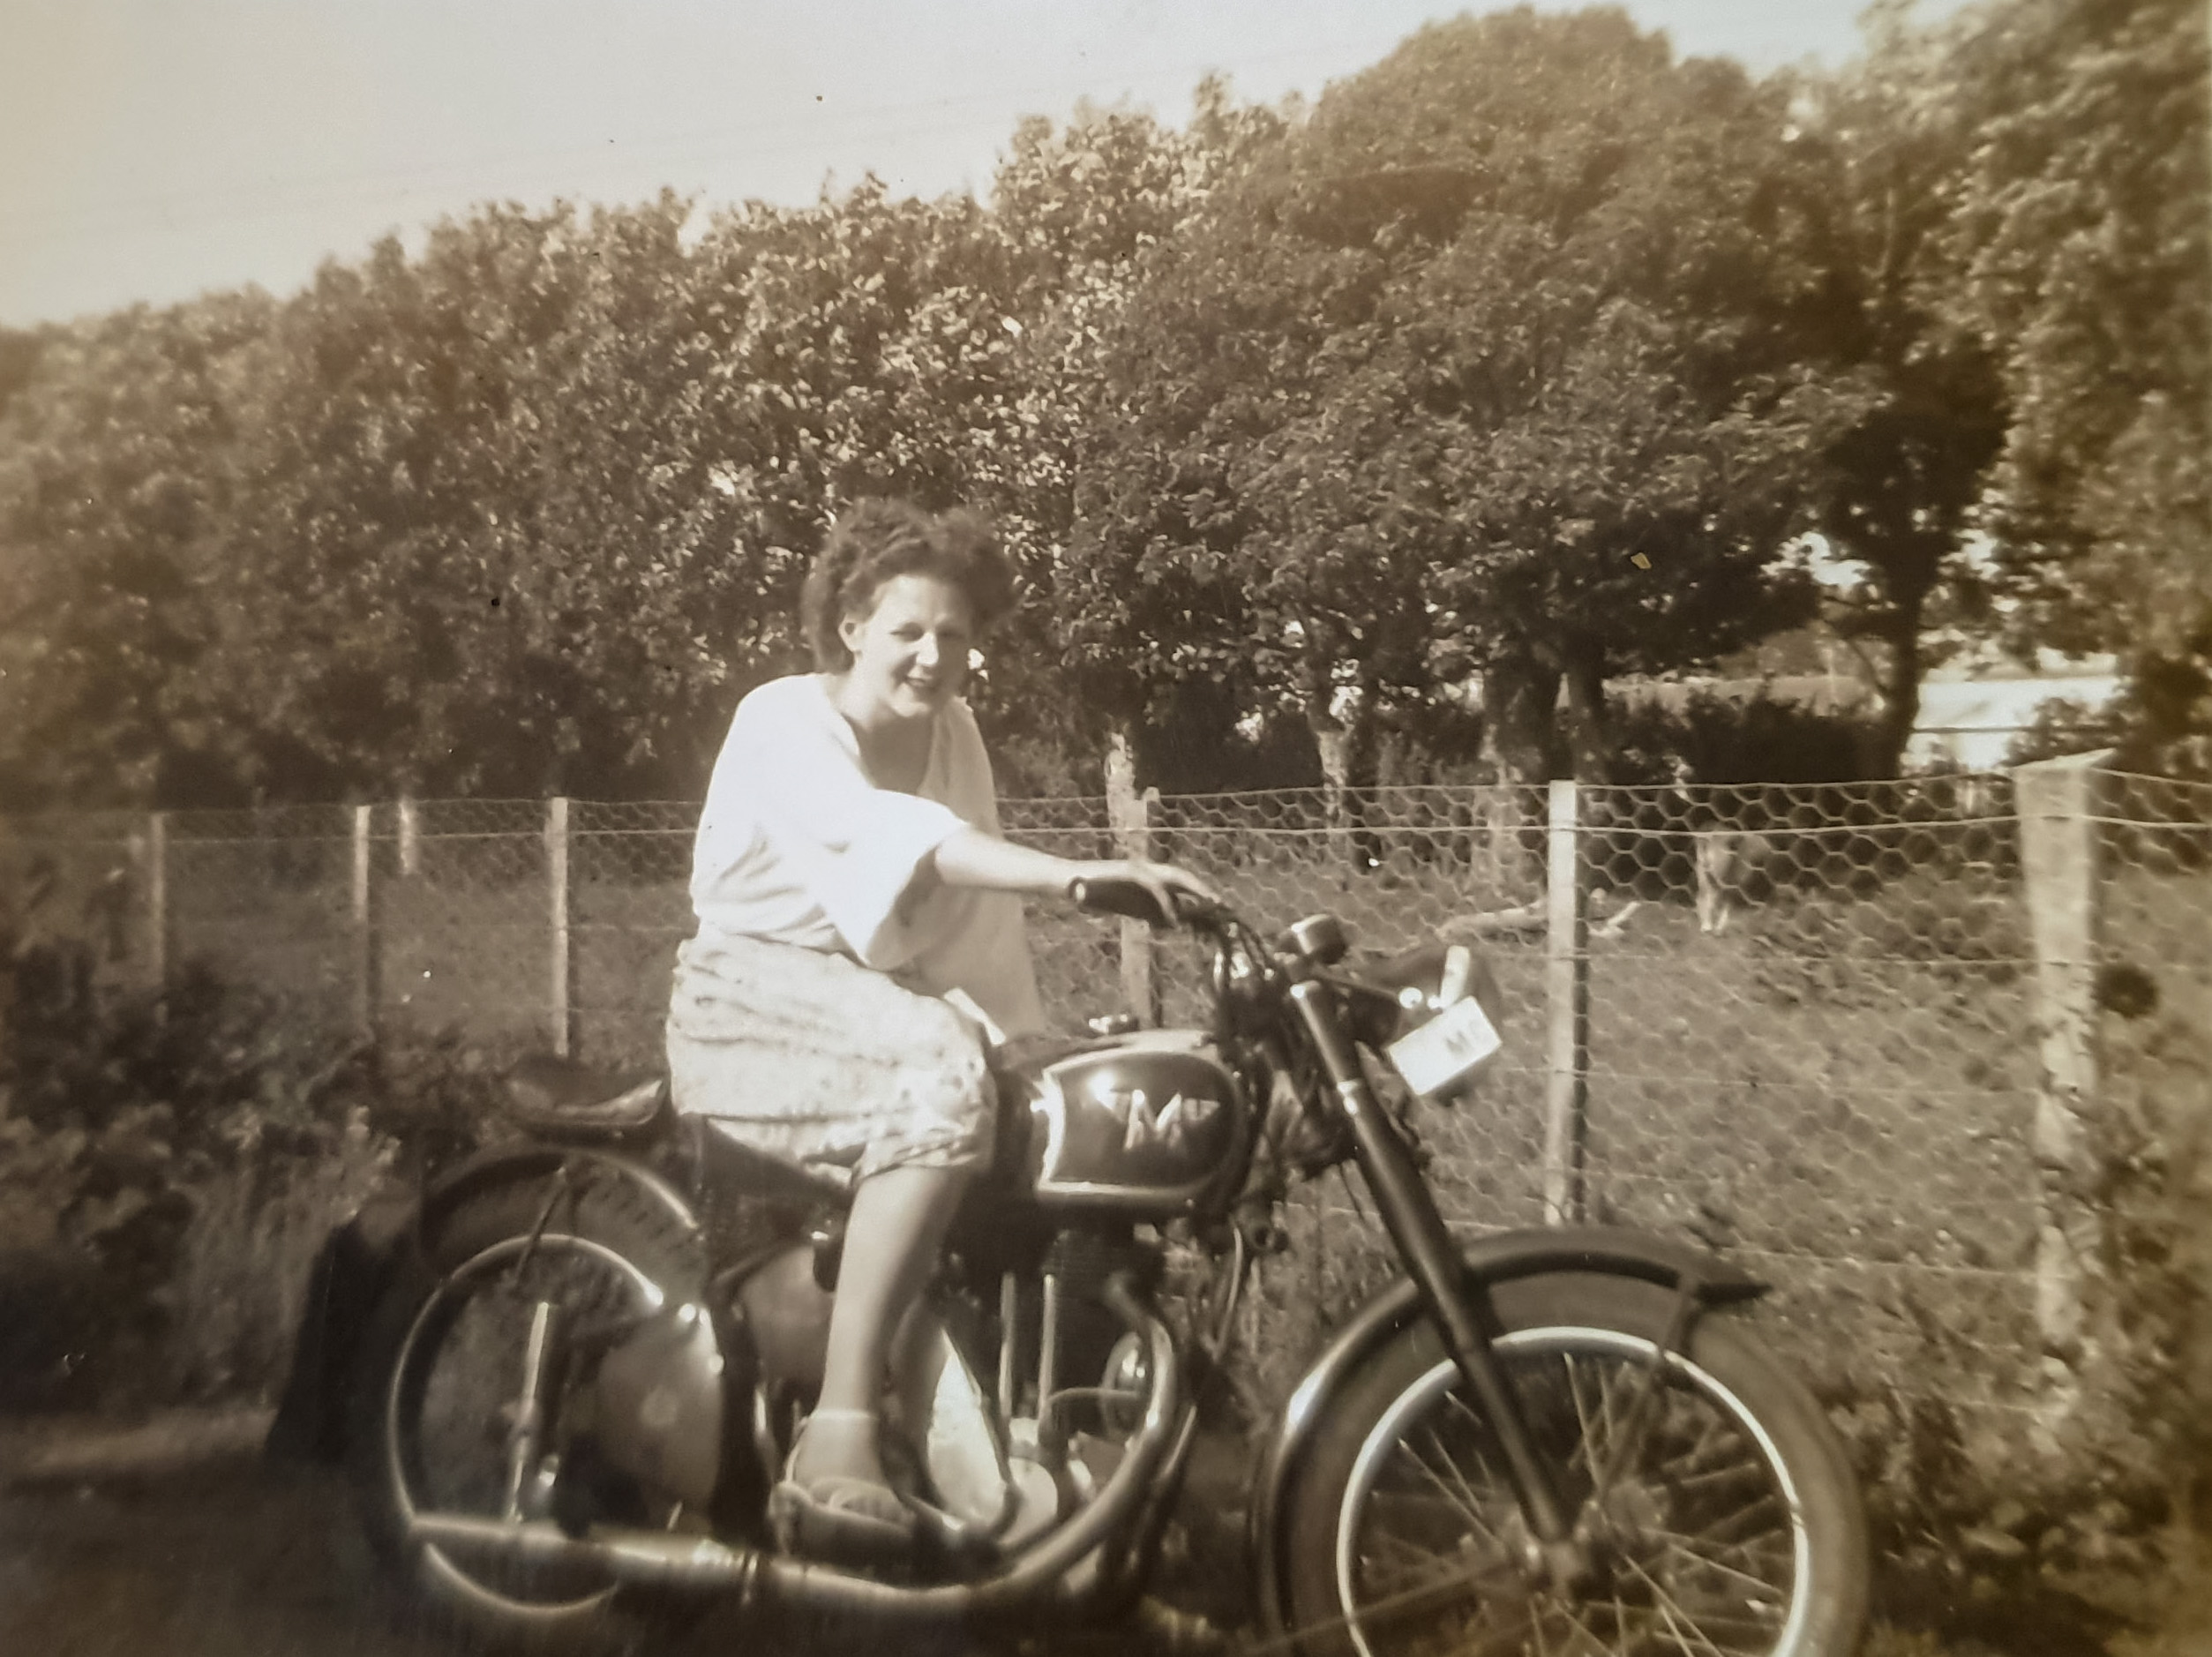 Les's Mum on her Dad's motorbike